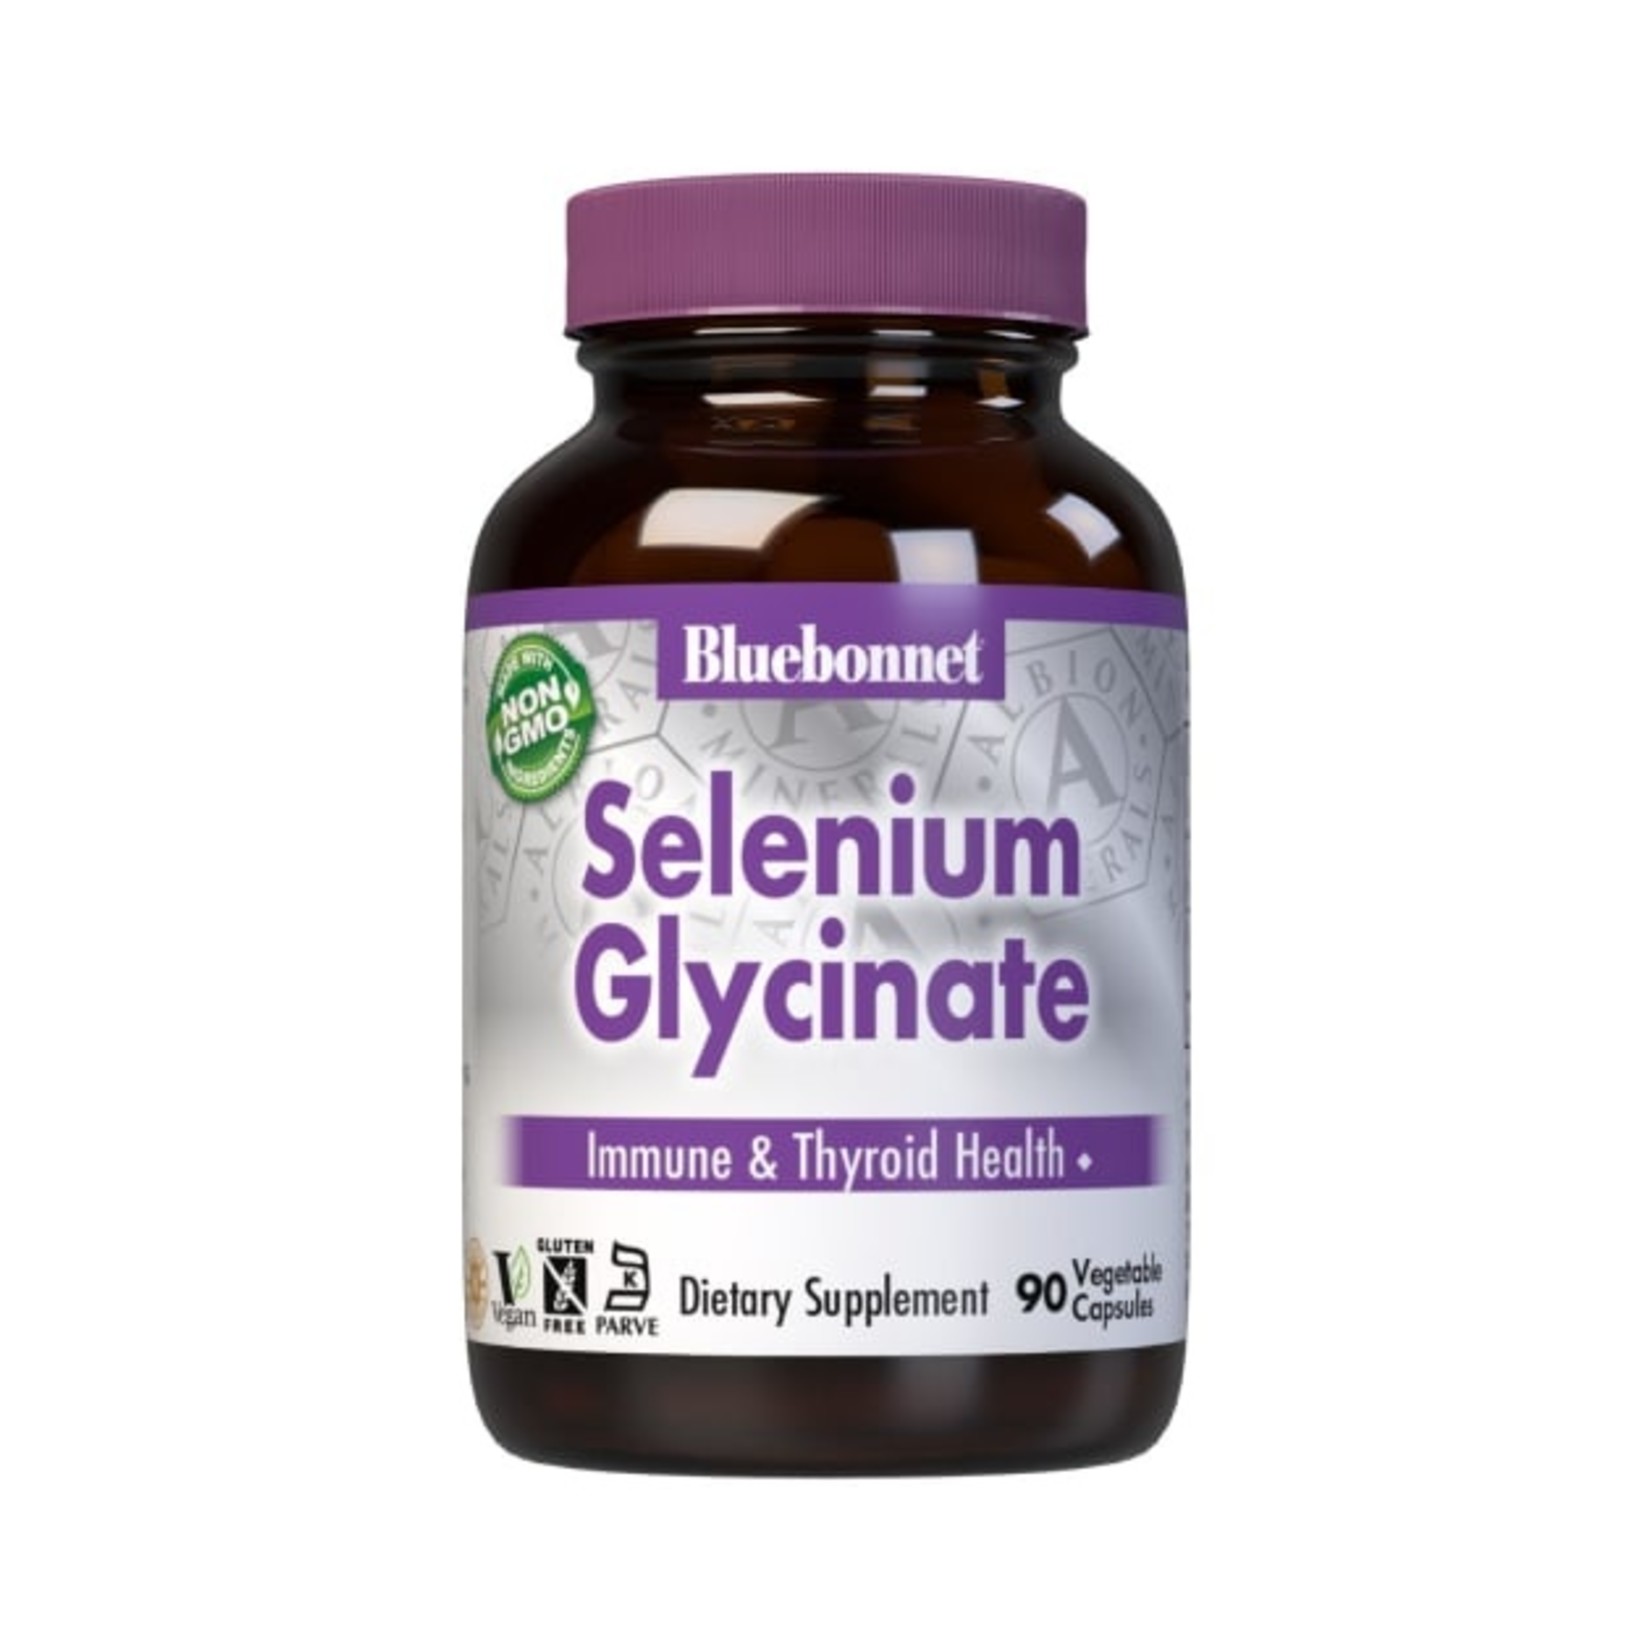 Bluebonnet Bluebonnet - Albion Selenium Glycinate 200 mg - 90 Veg Capsules